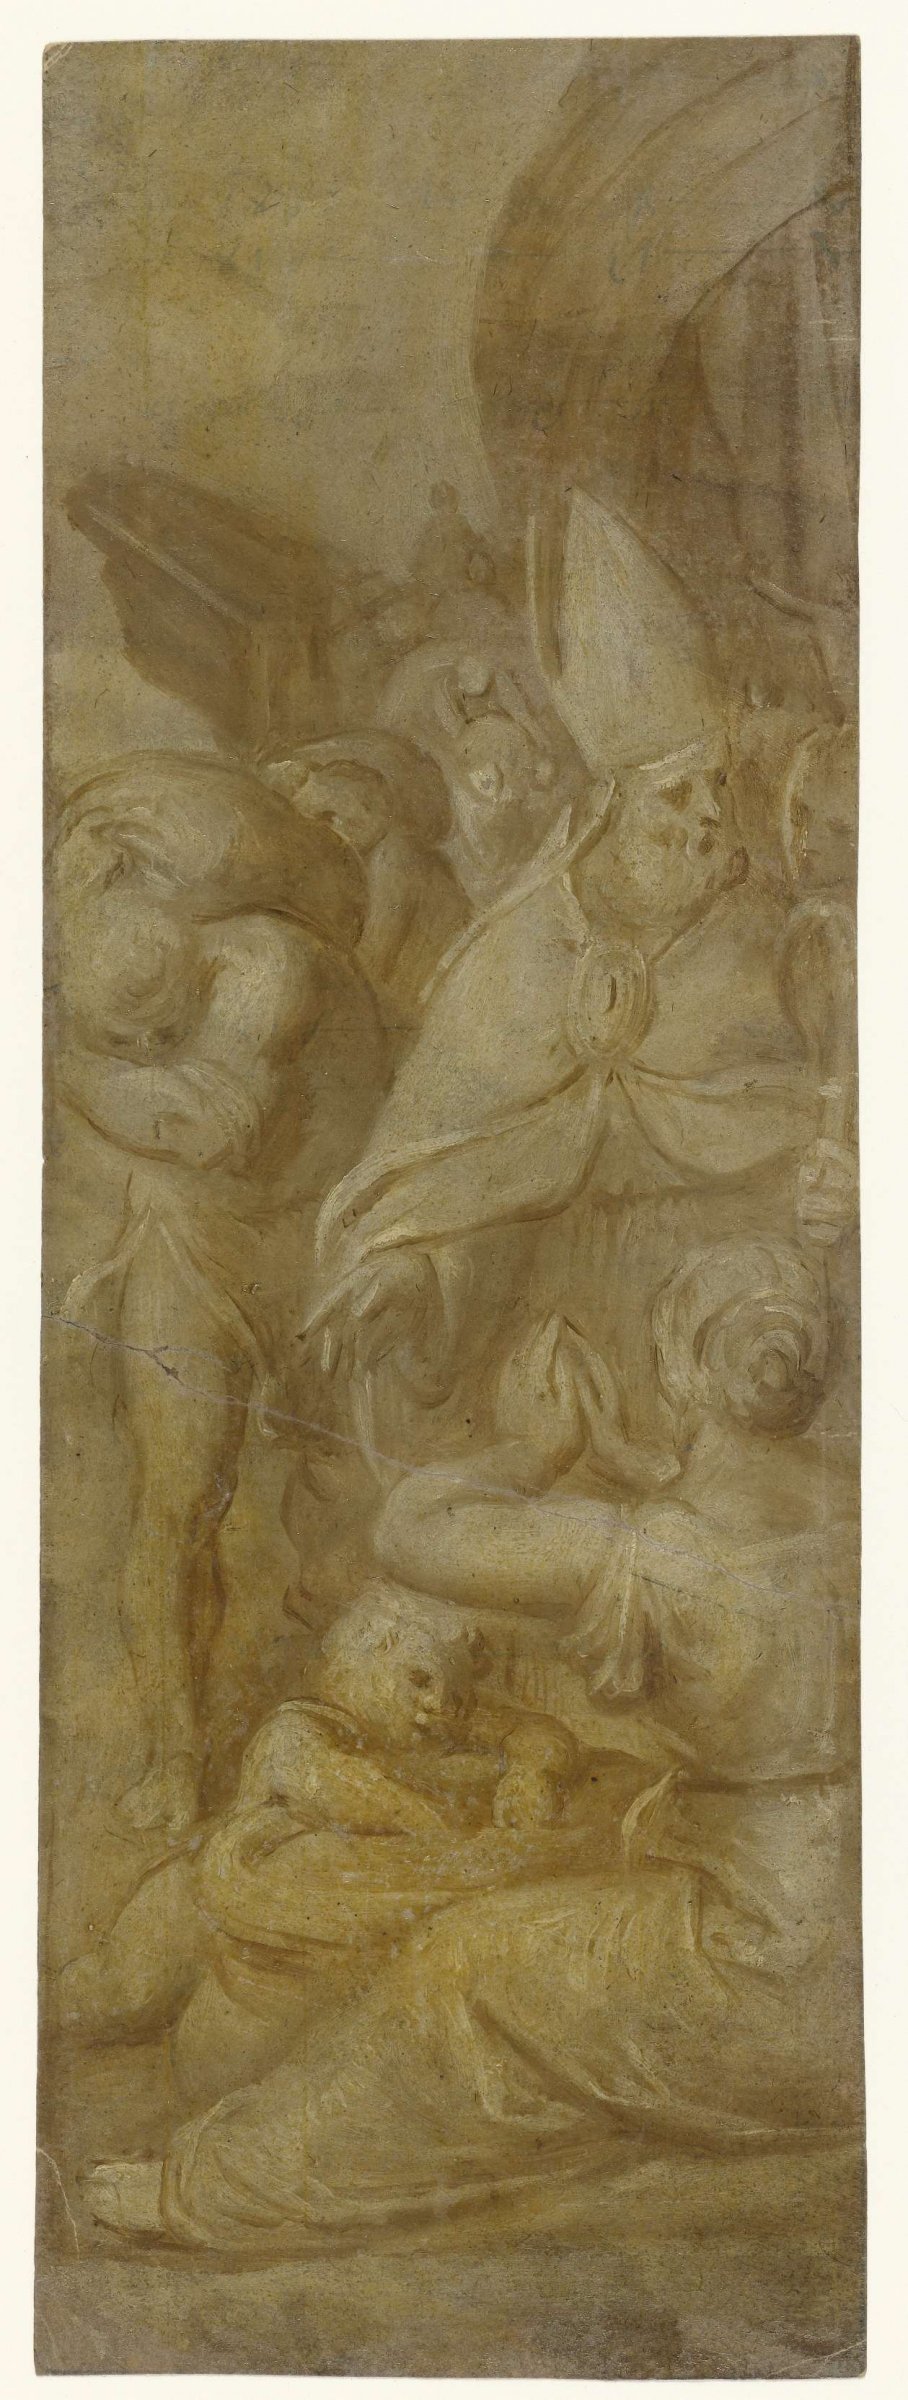 Saint Nicholas saves city of Myra from famine, Otto van Veen, 1600 - 1610